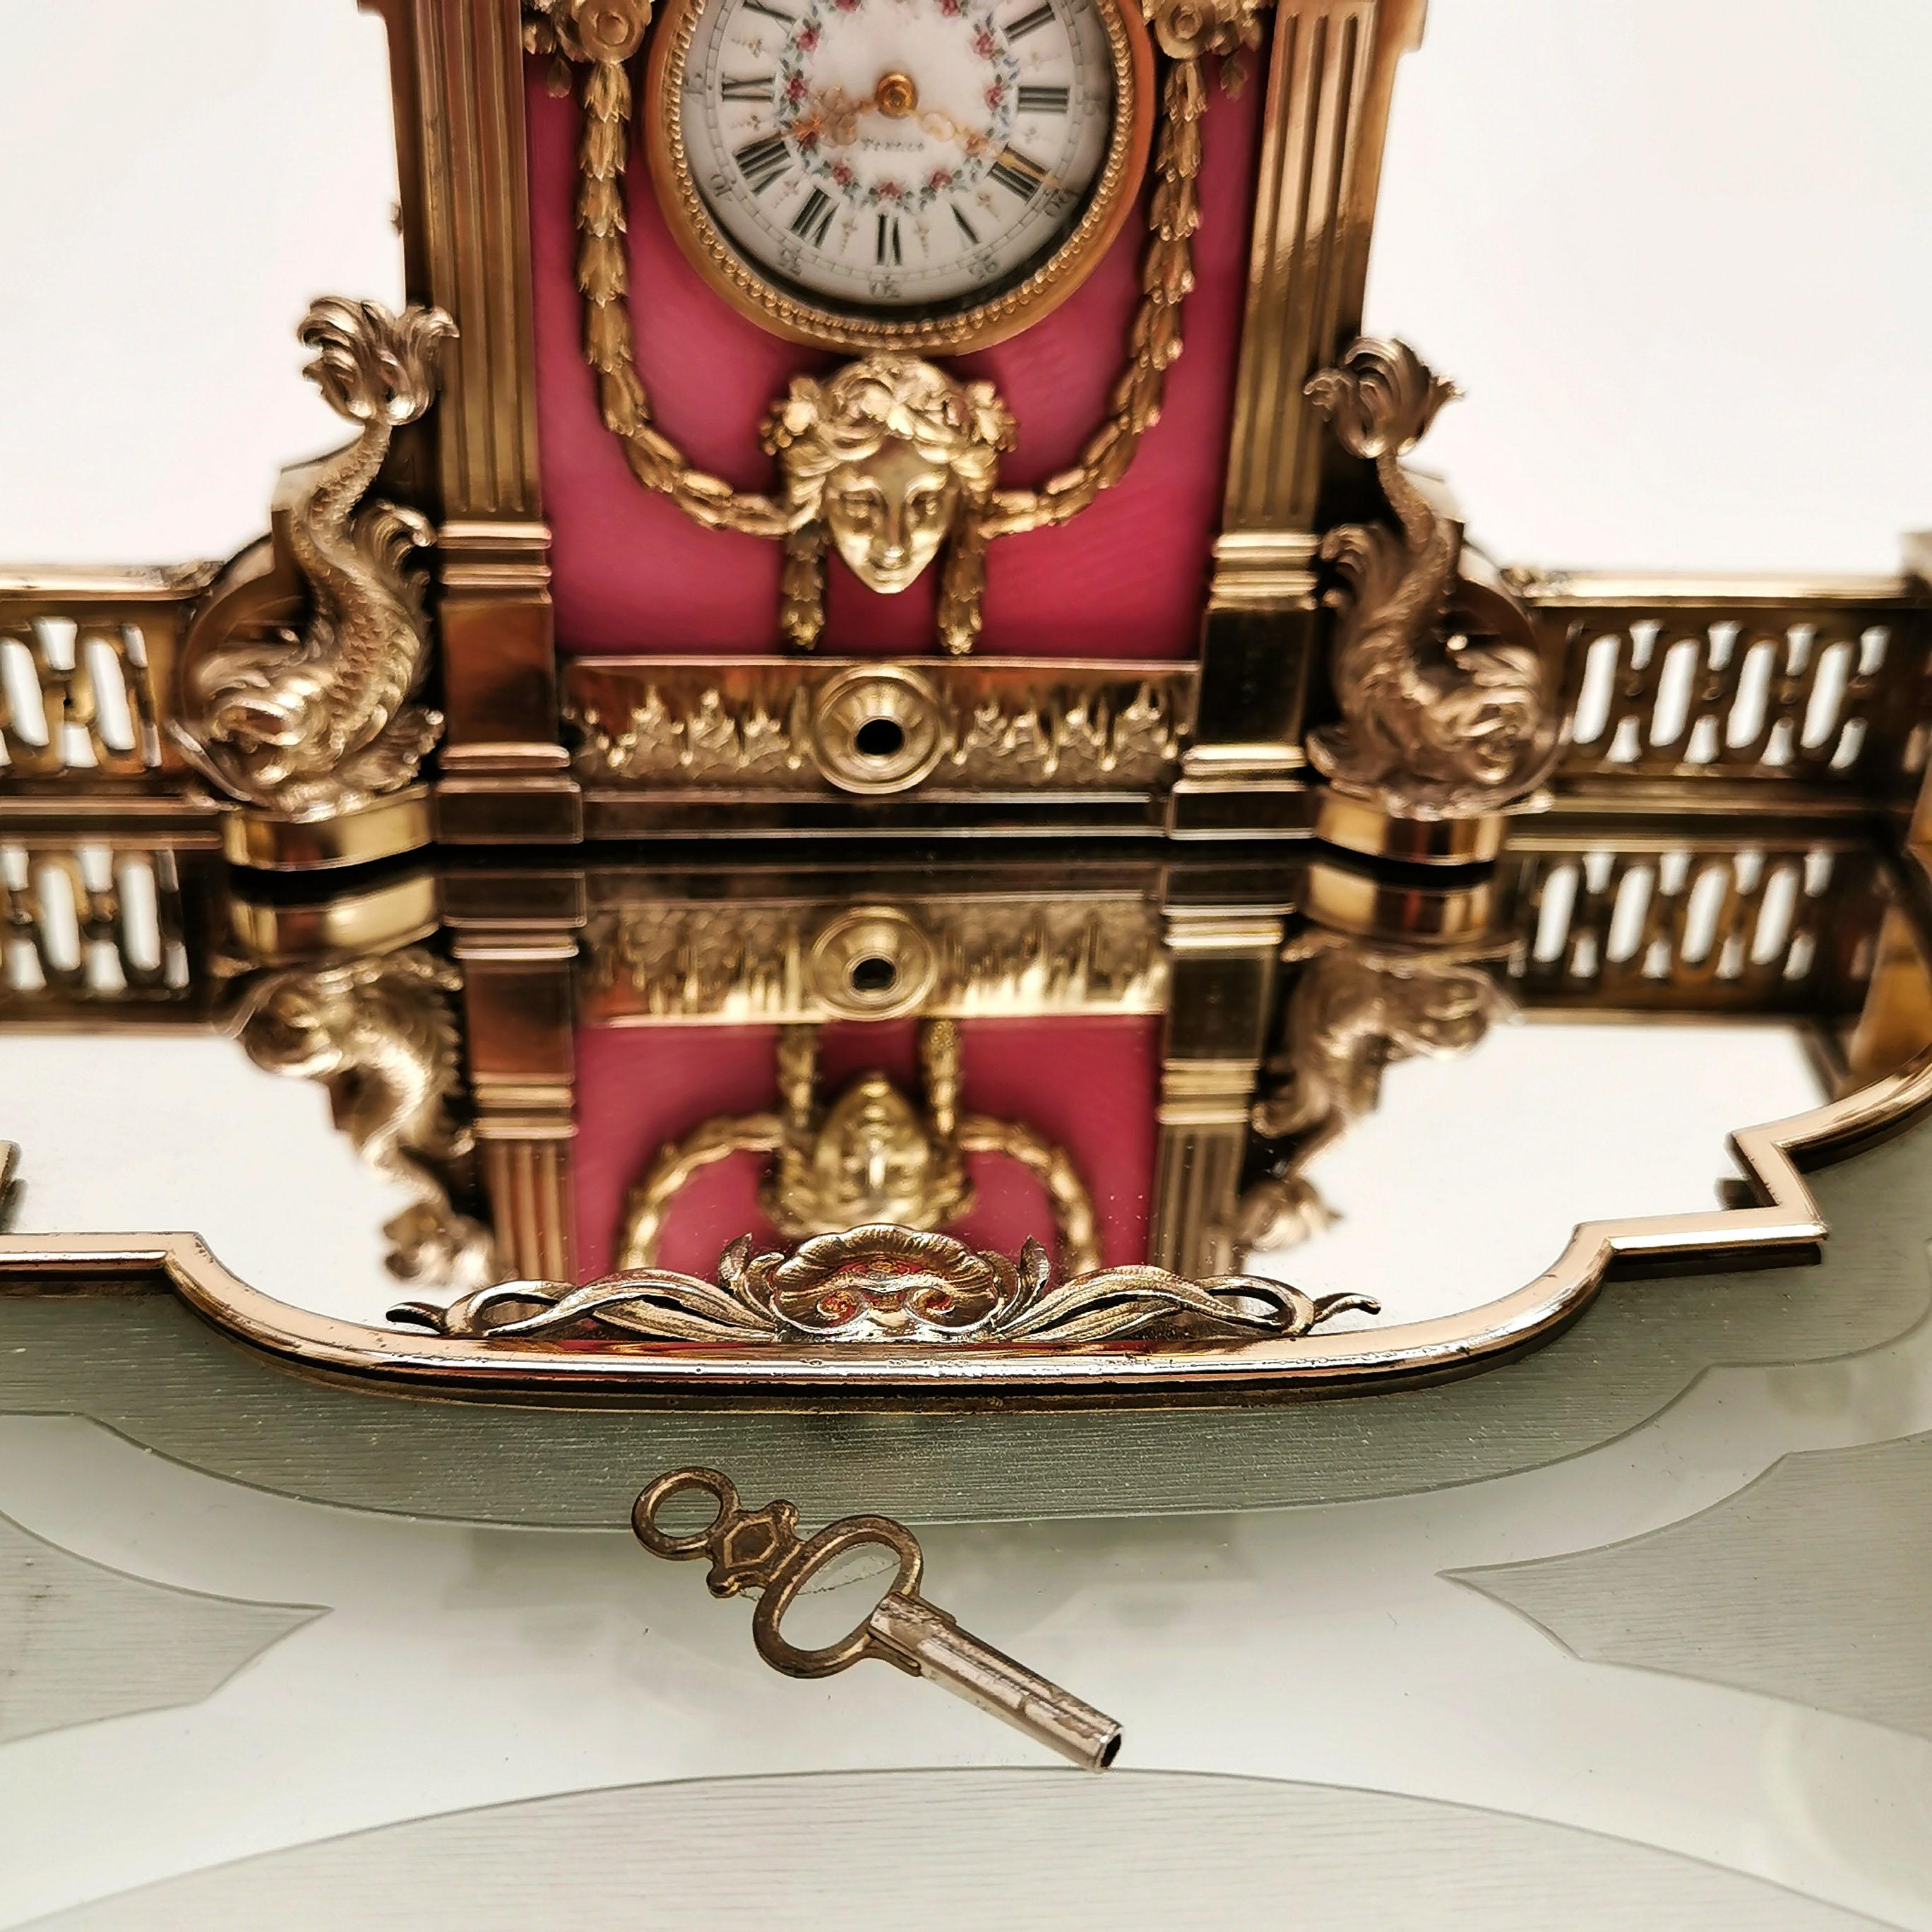 Antique French Silver Gilt, Glass & Enamel Inkstand Clock, Paris, France c. 1880 8